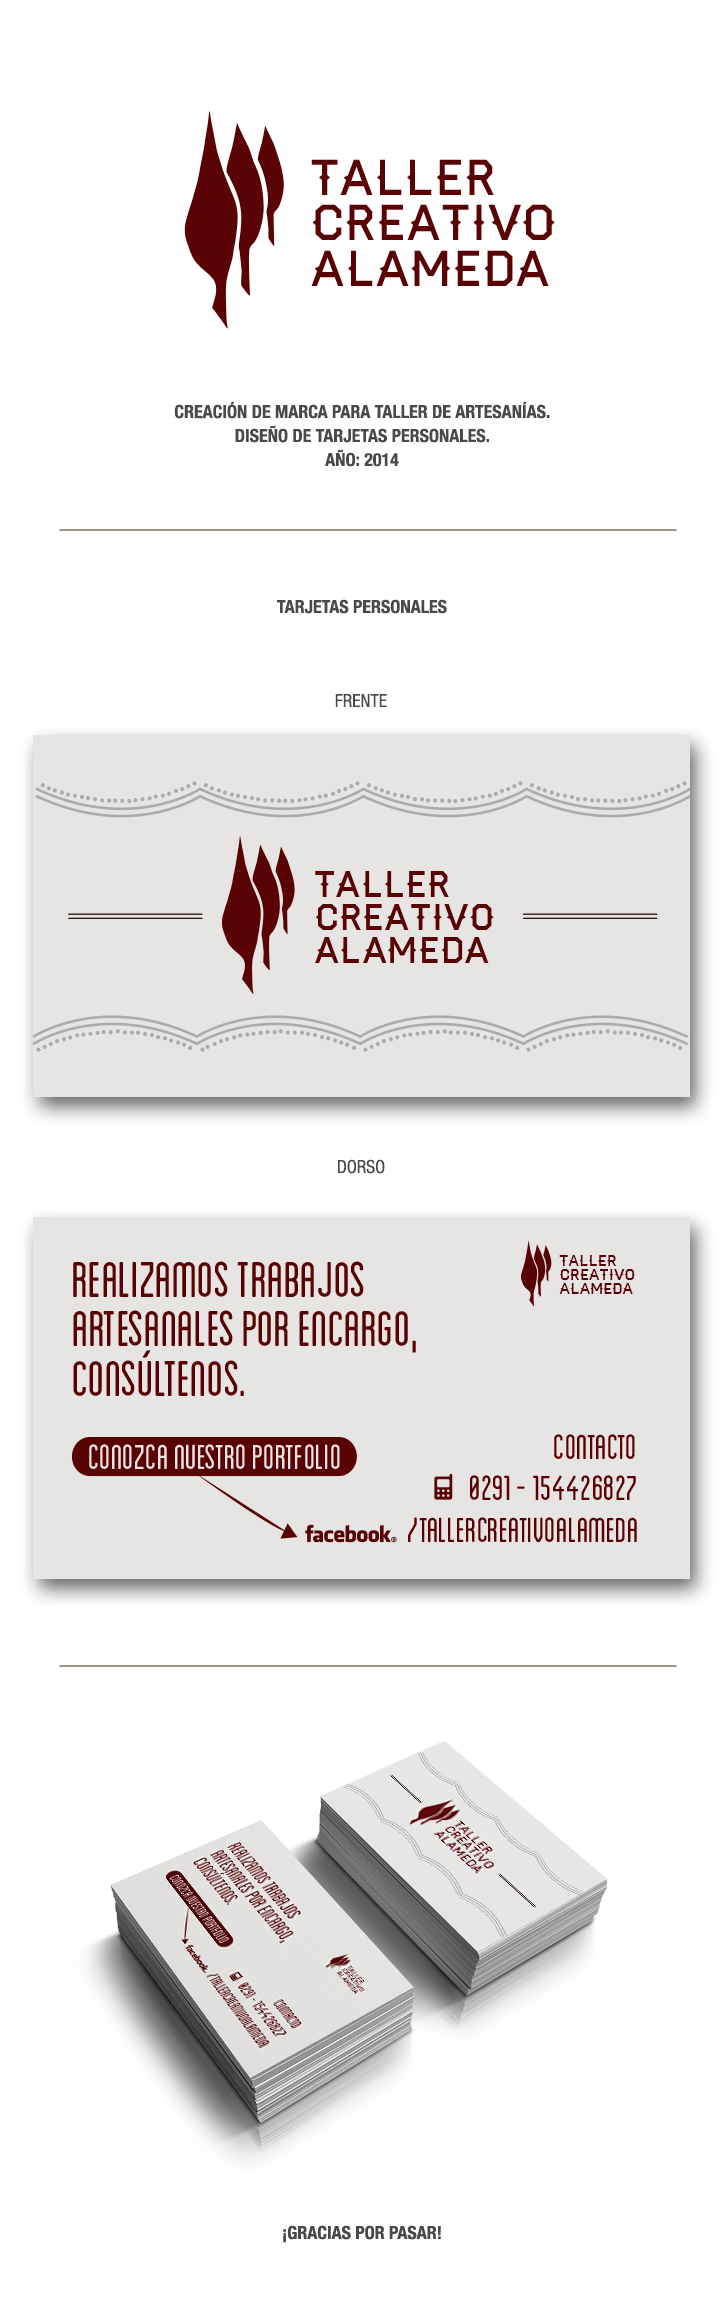 brand ad taller alameda creativo proyect design diseño personal cards marca bahia Blanca cris arias